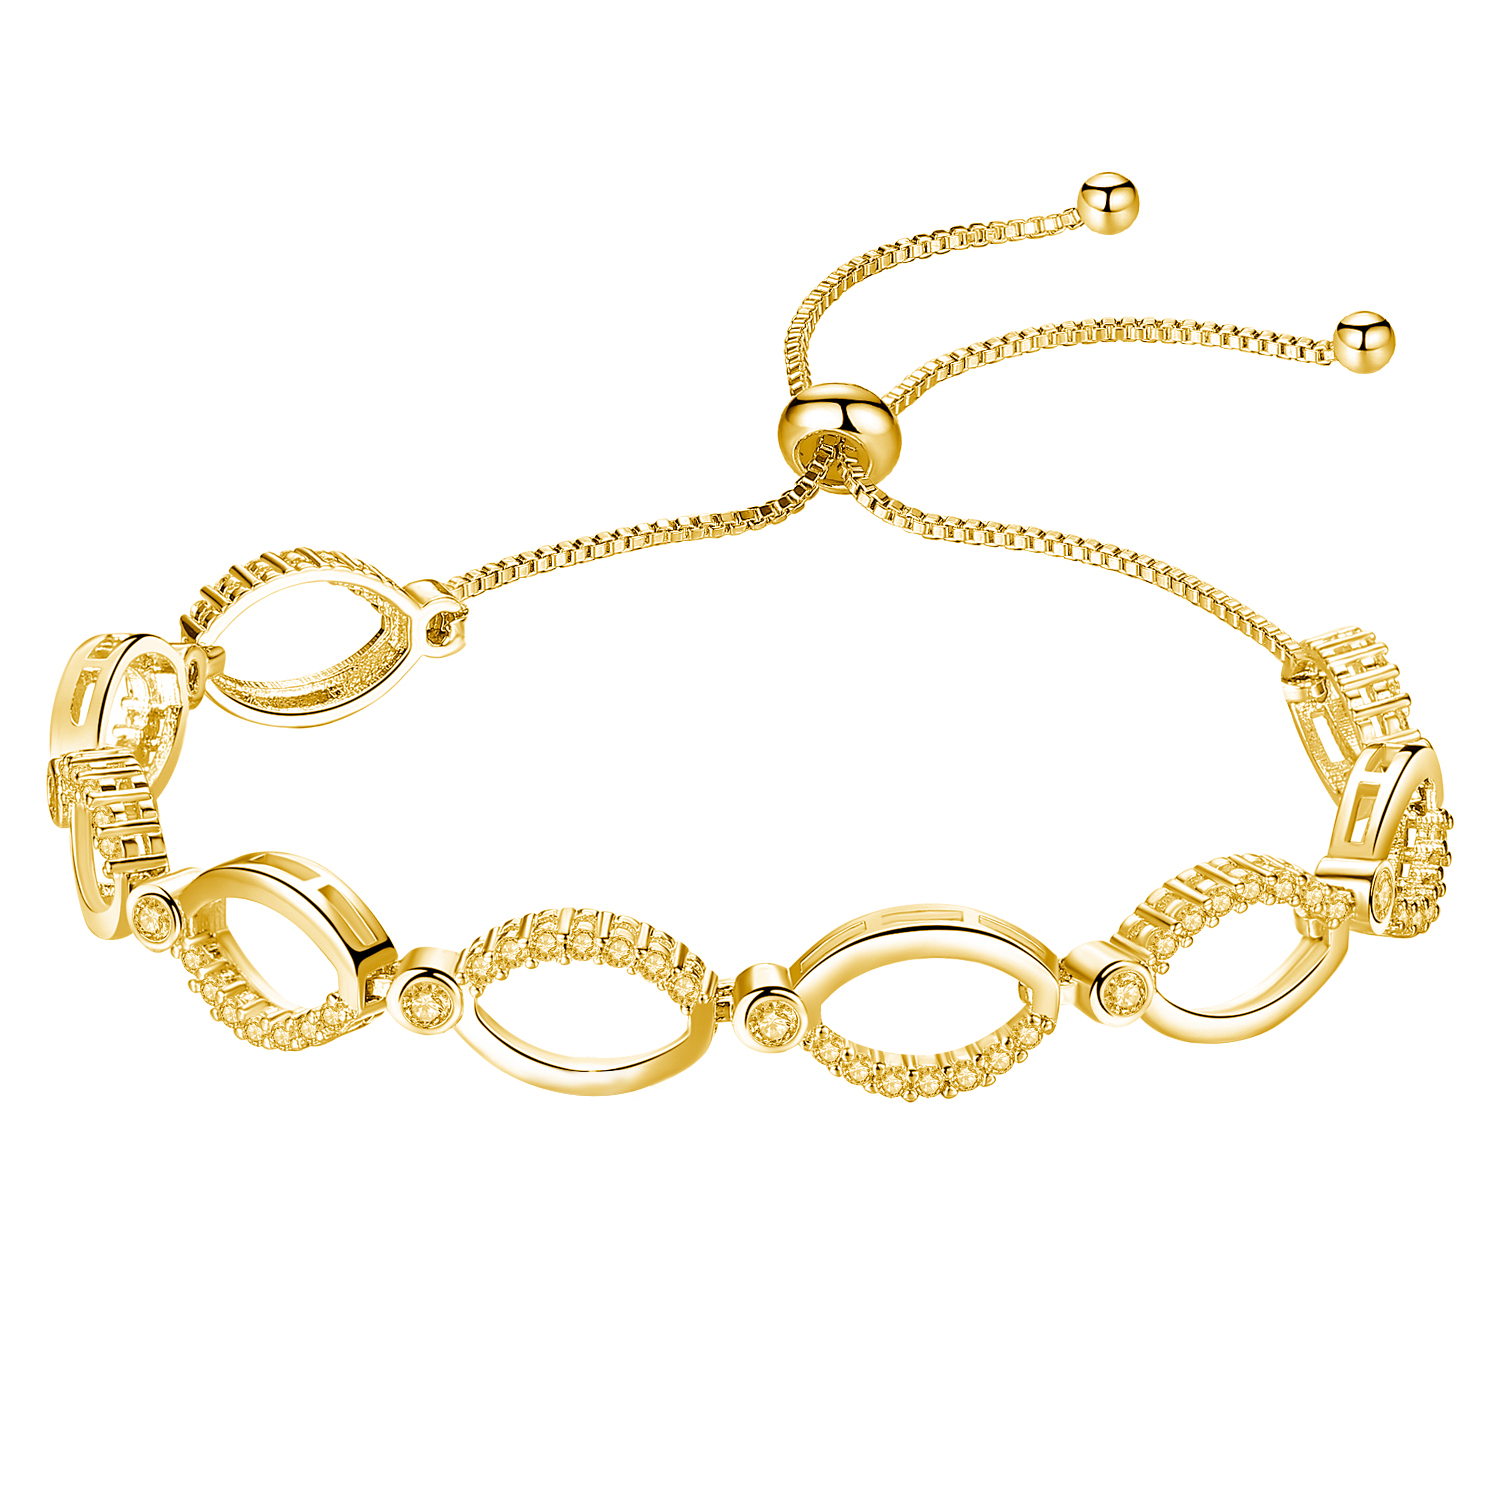 10 x Adjustable Multi Linked Gold Tone Bracelet Made with Swarovski Crystal Elements, 2 Styles, 5Pcs Per Style | UK SELLER | GSVB061-Gold